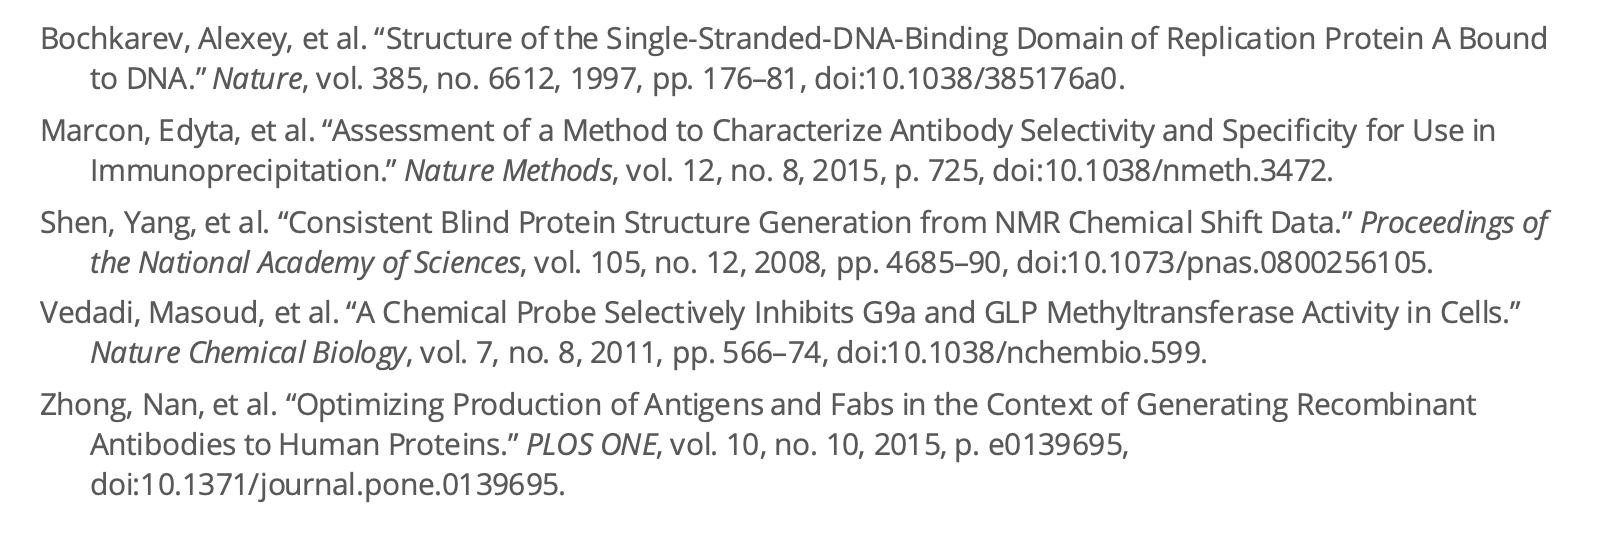 standard scientific format zotero download